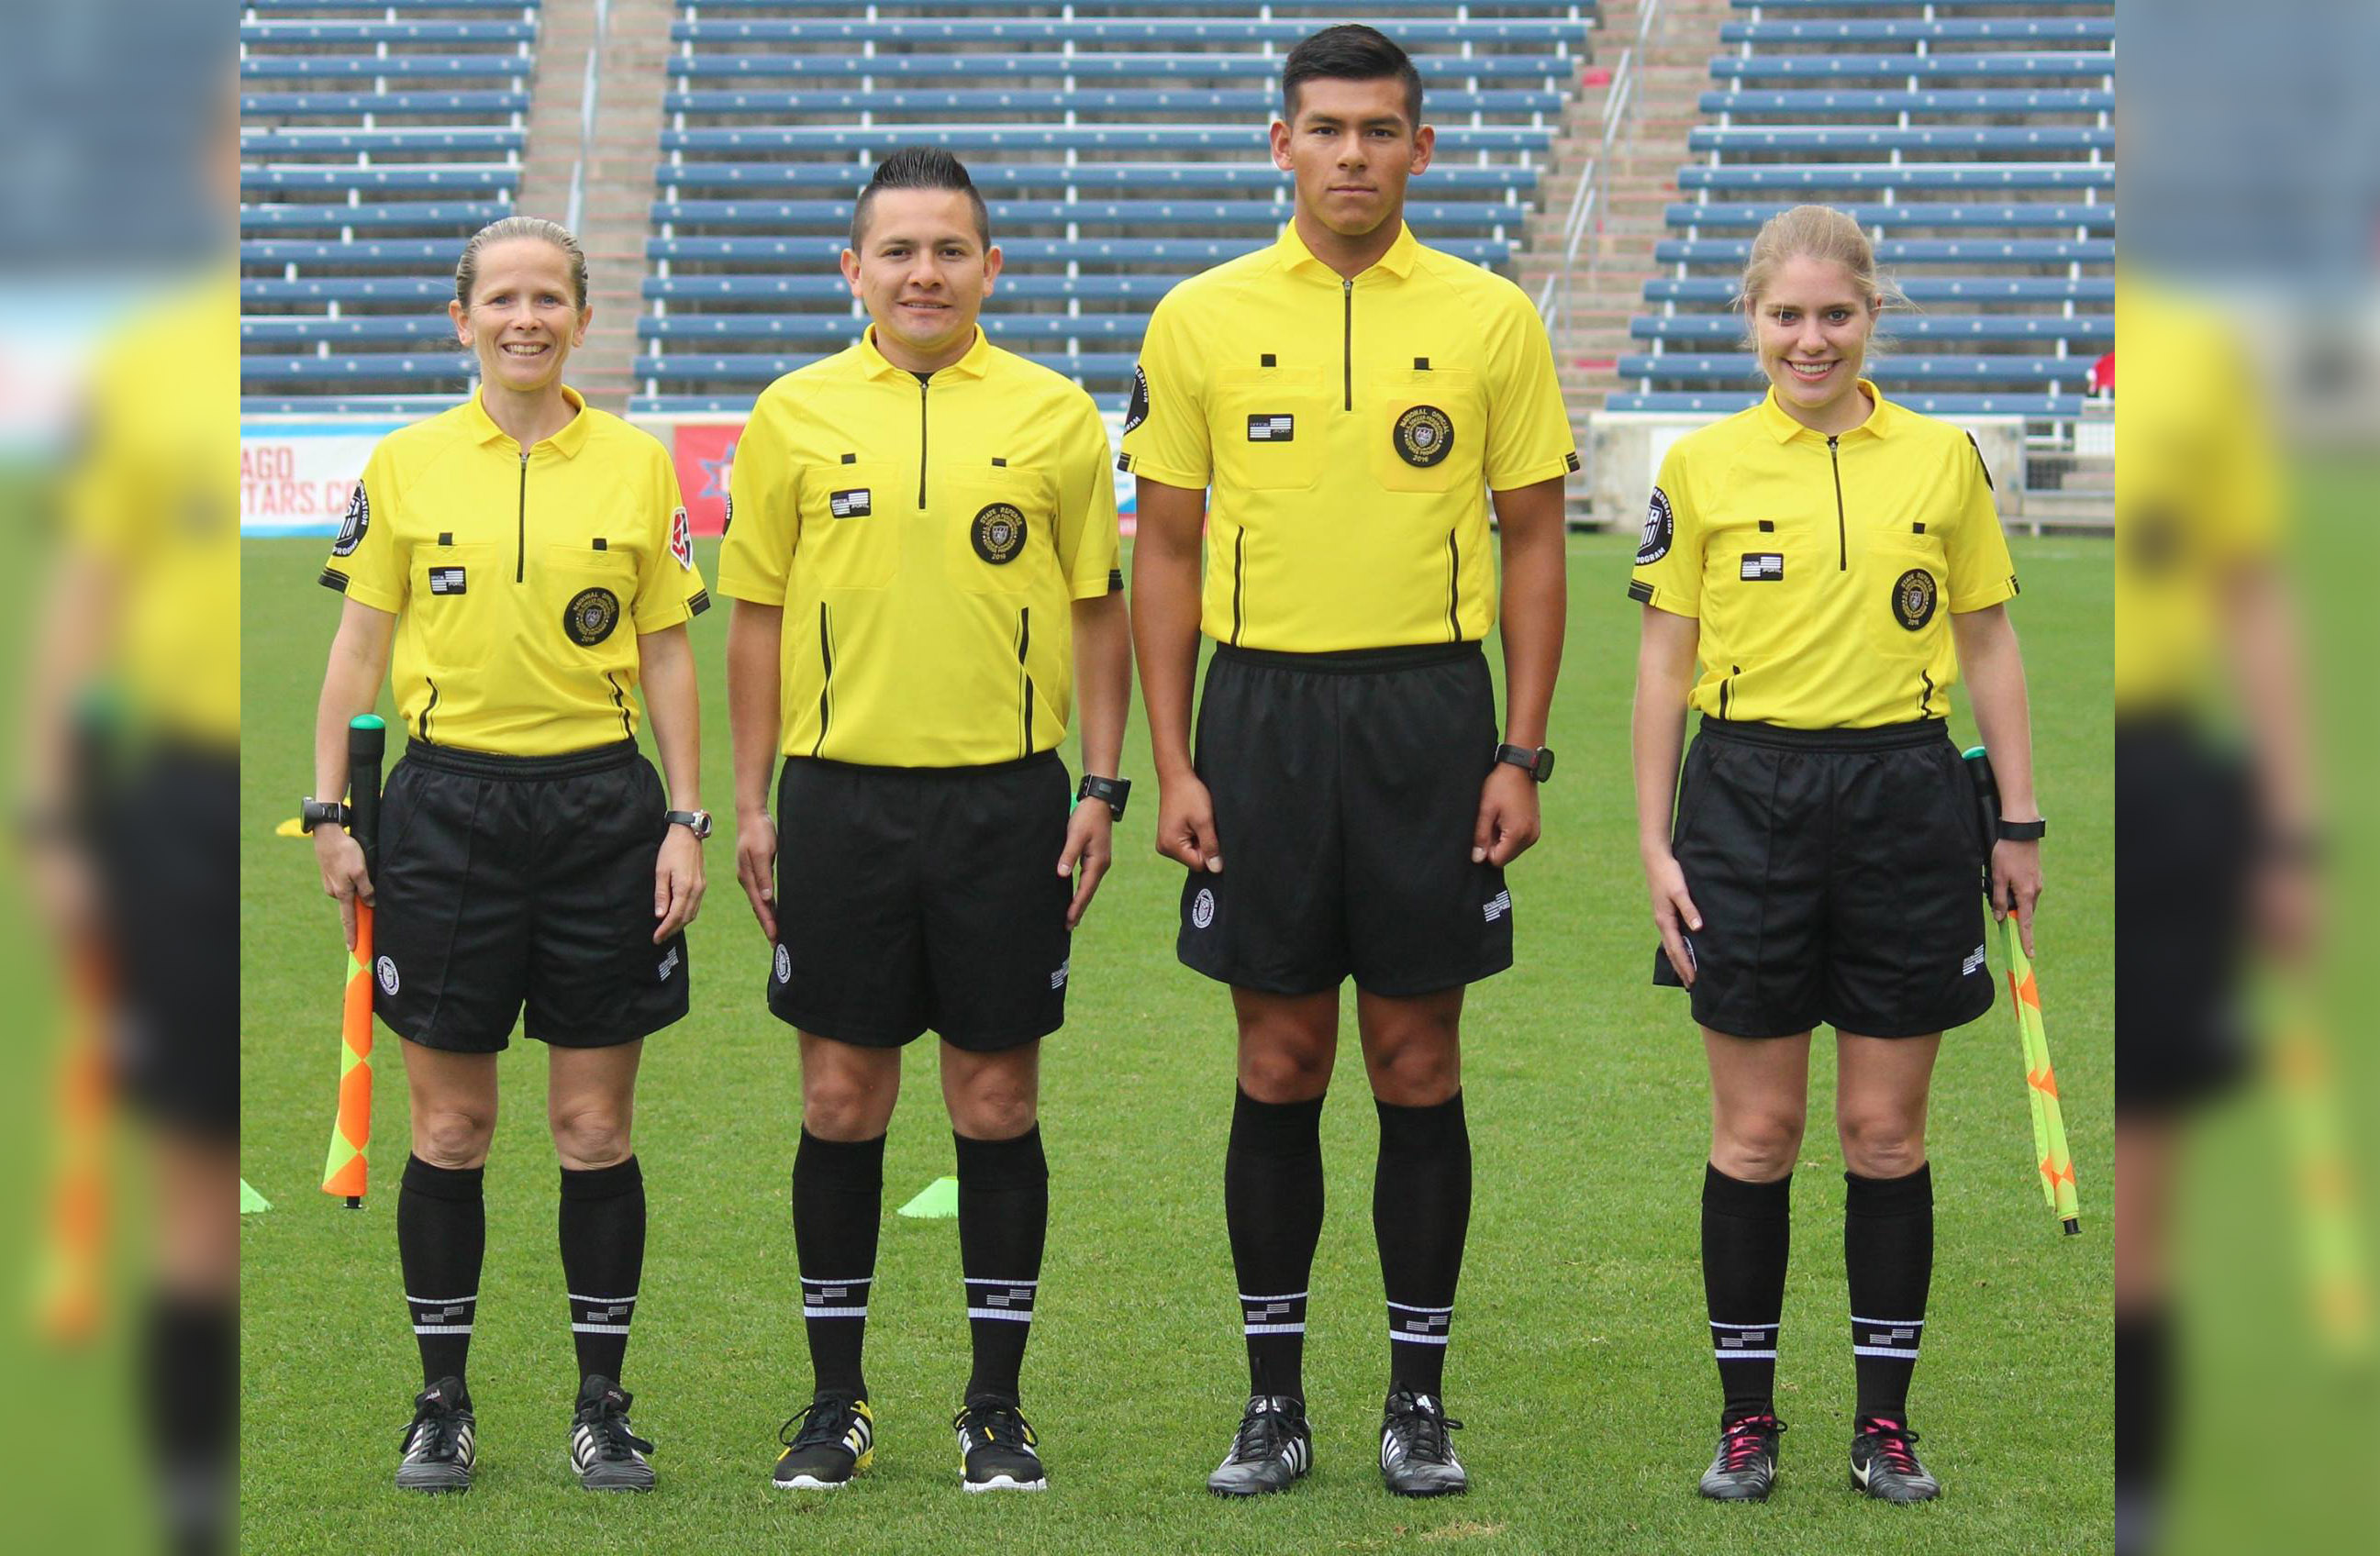 yellow soccer referee jersey